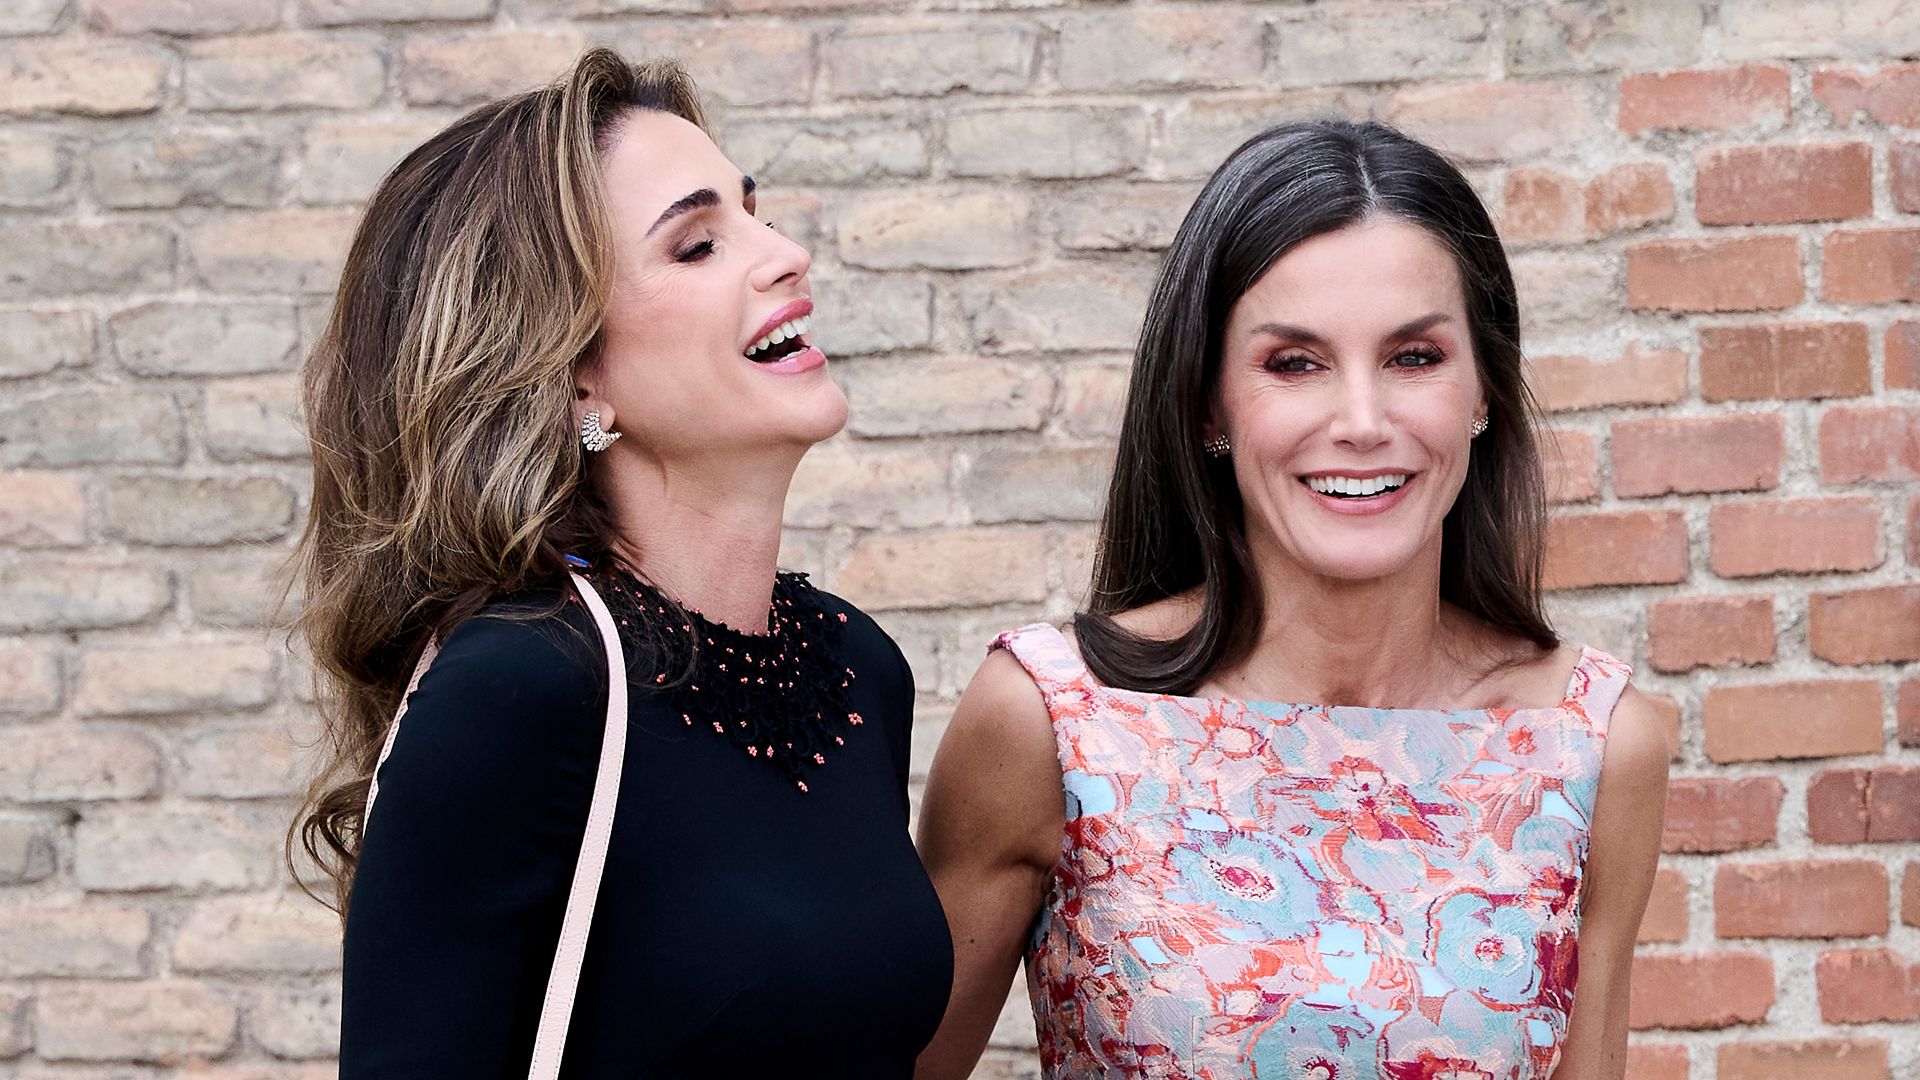 Queen Rania laughs as she puts arm around Queen Letizia